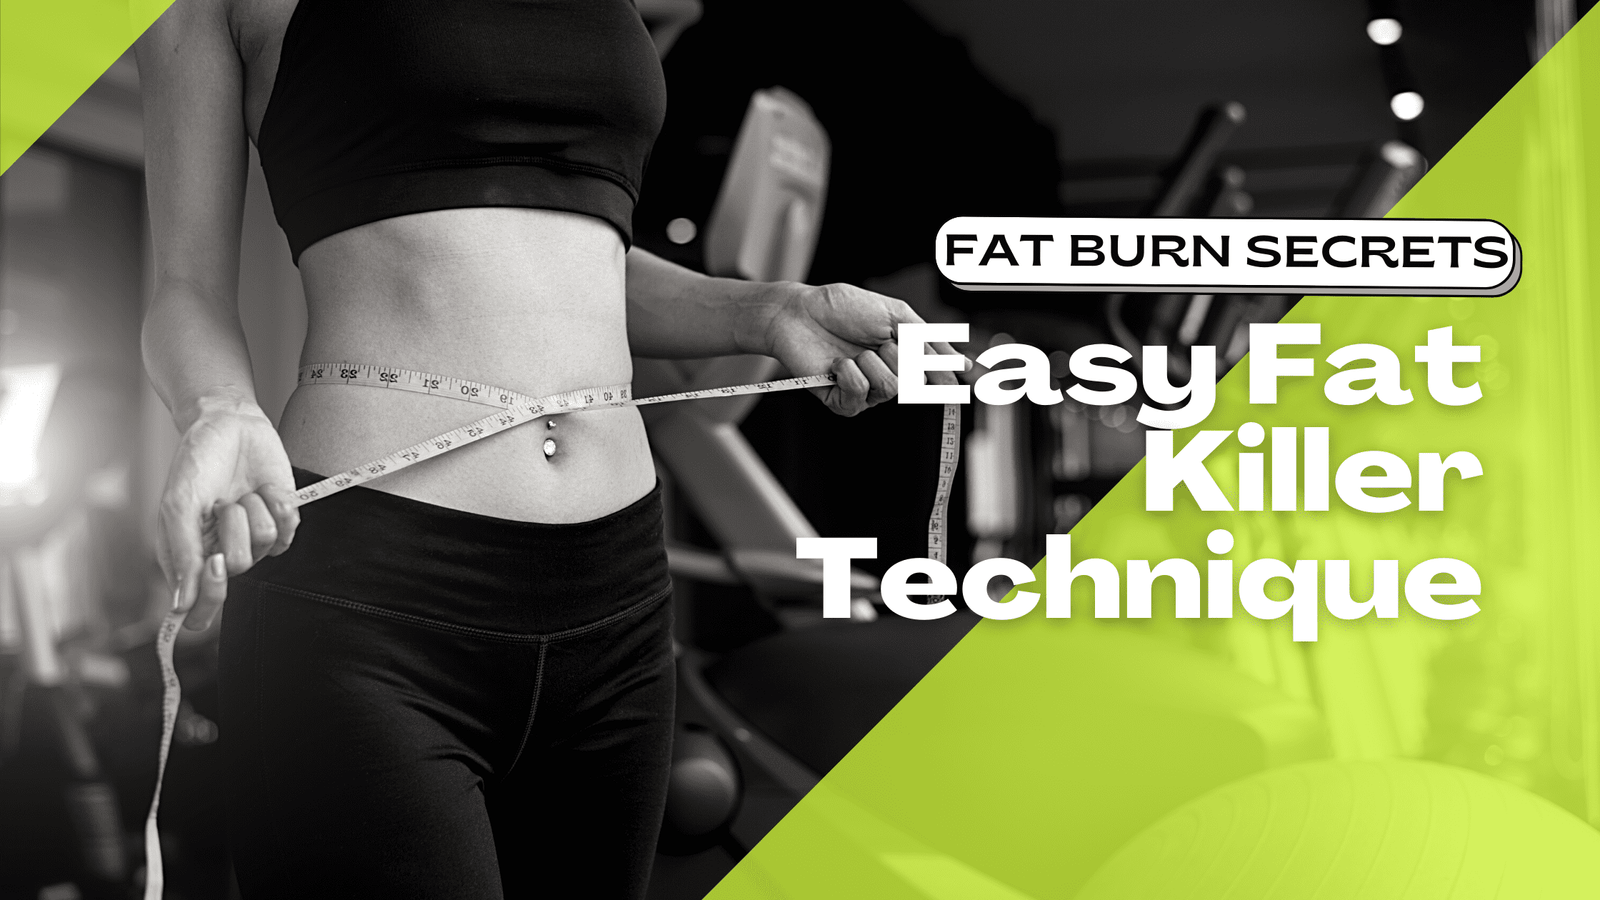 Fat Burn Secrets-Easy Fat Killer Technique